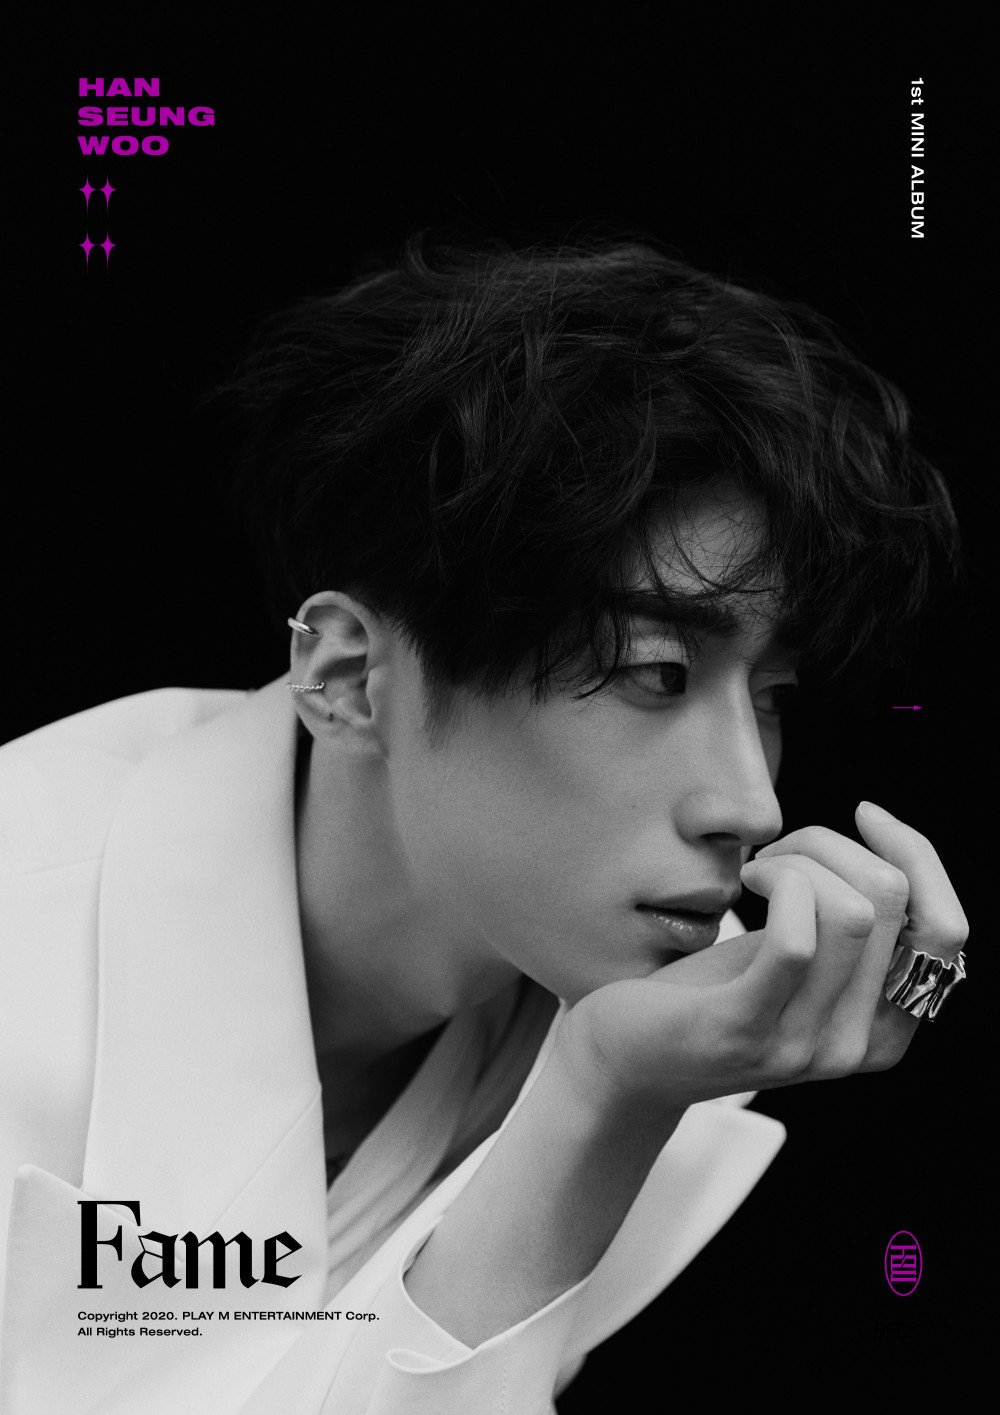 victon-seungwoo-black-white-teaser-images-solo-mini-album-fame-3